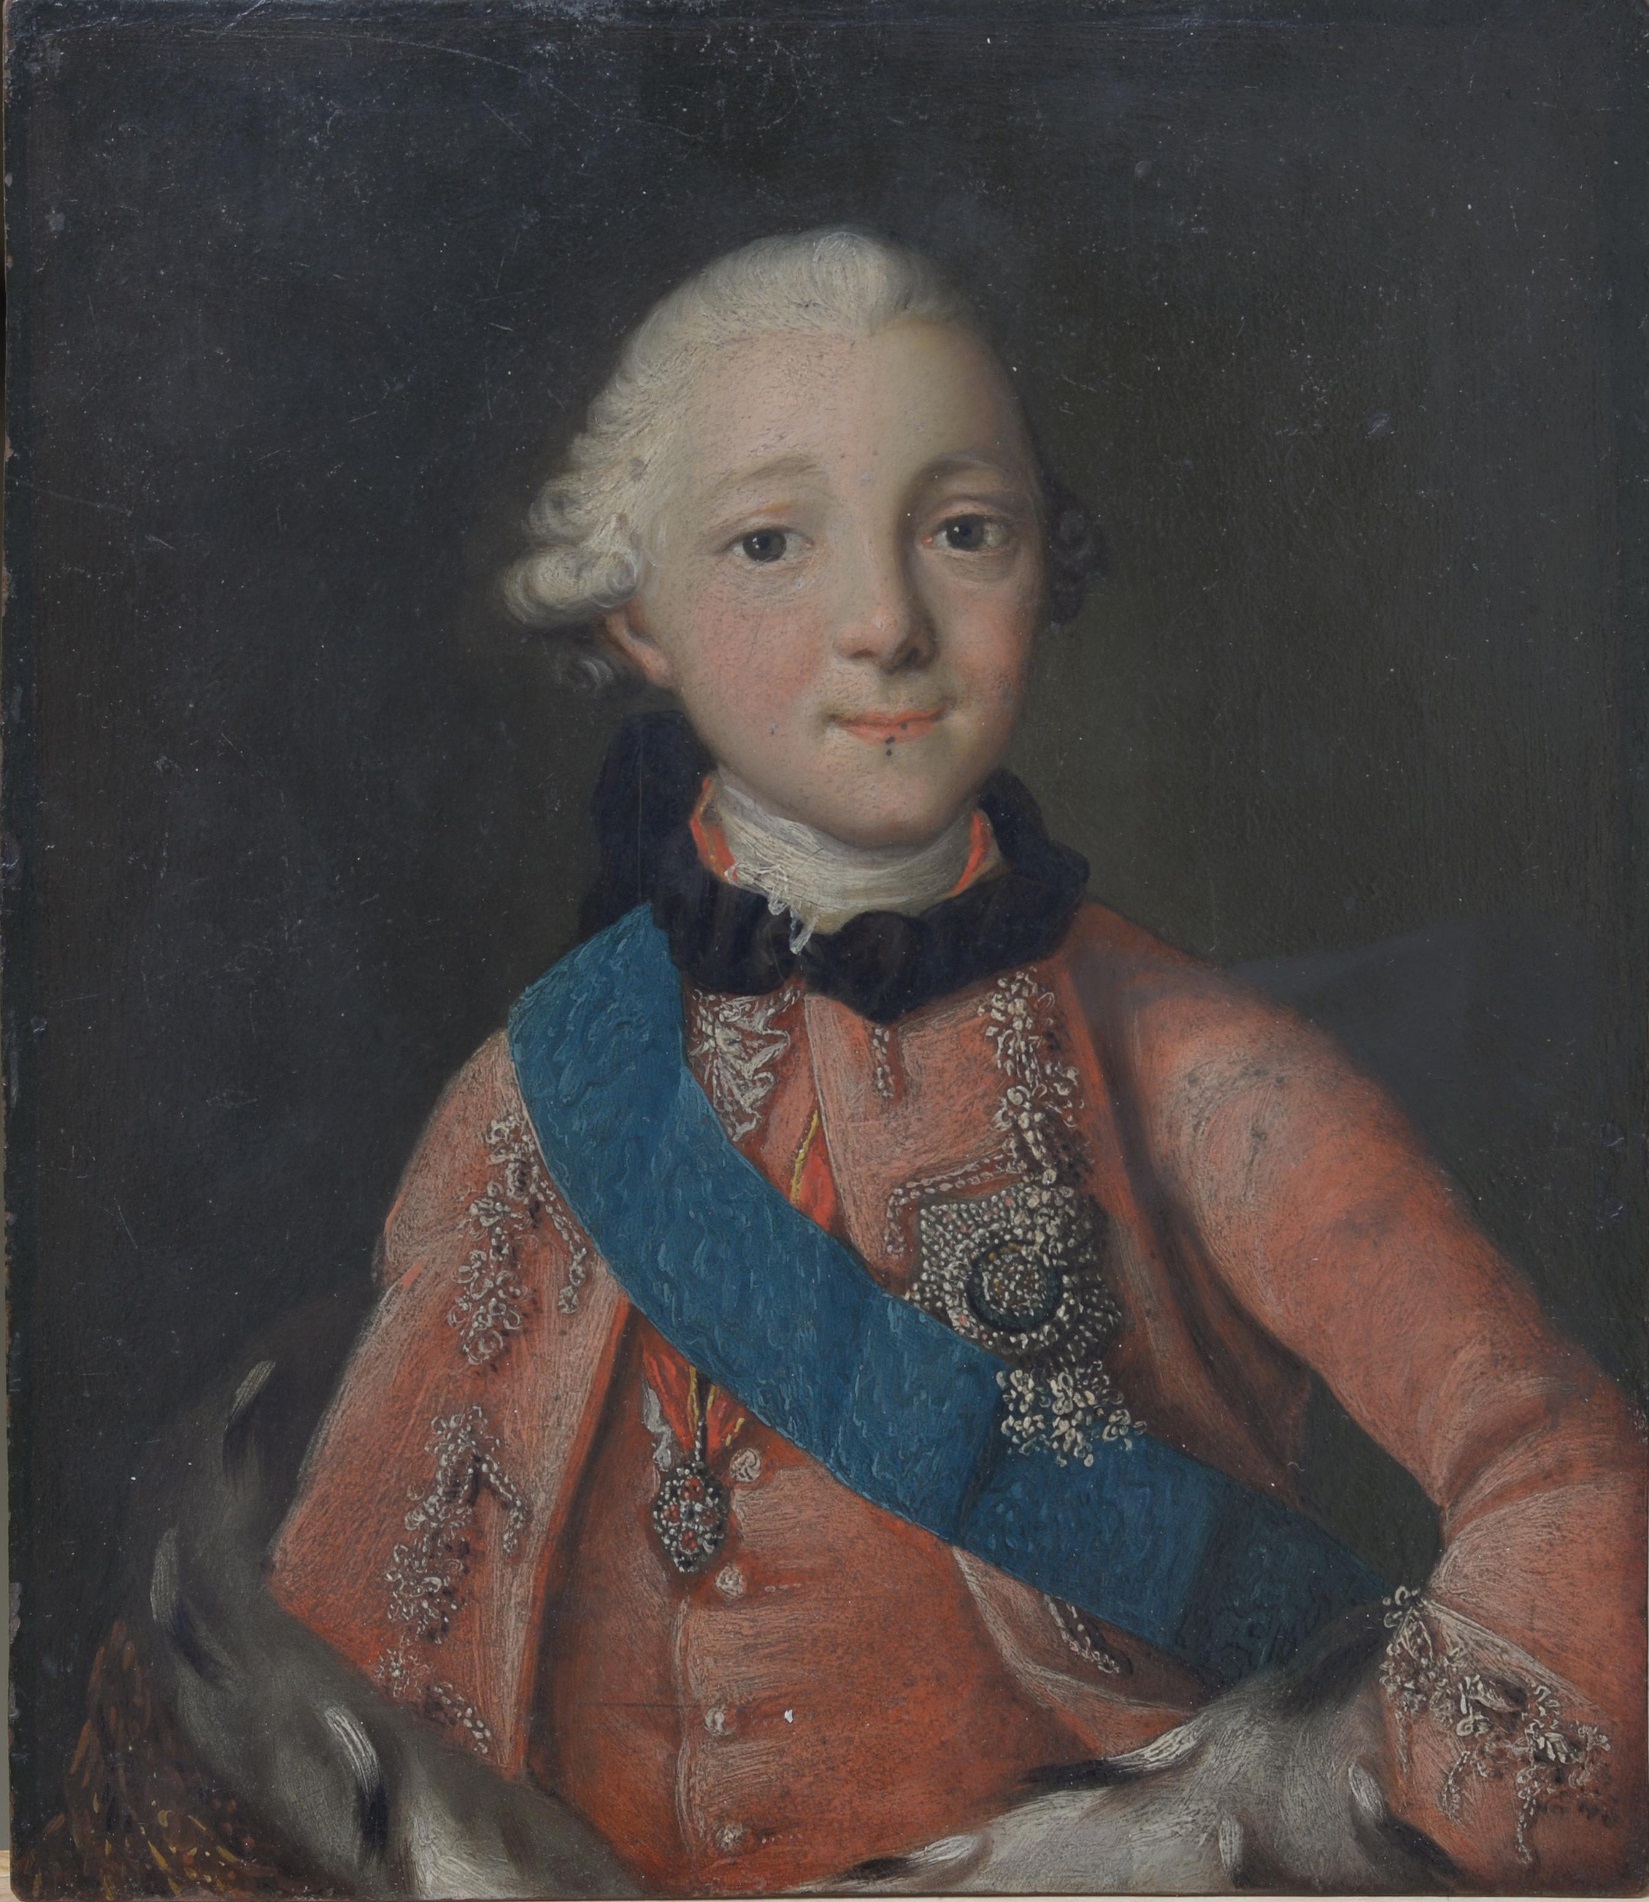 Ленглинг. "Портрет Павла I". 1771. Эрмитаж, Санкт-Петербург.